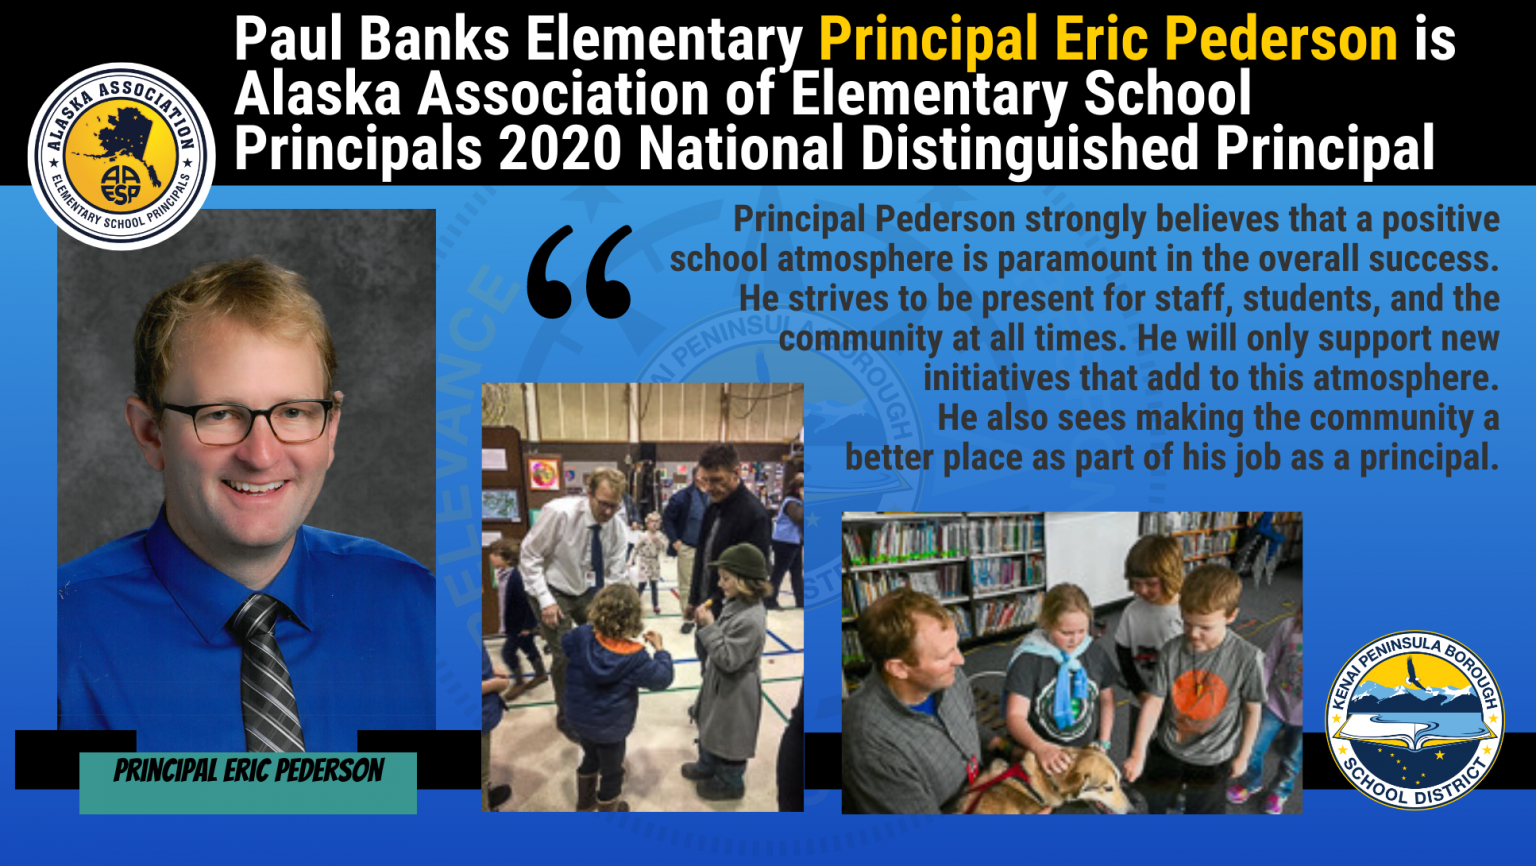 Principal Eric Pederson, named Alaska Association of Elementary School